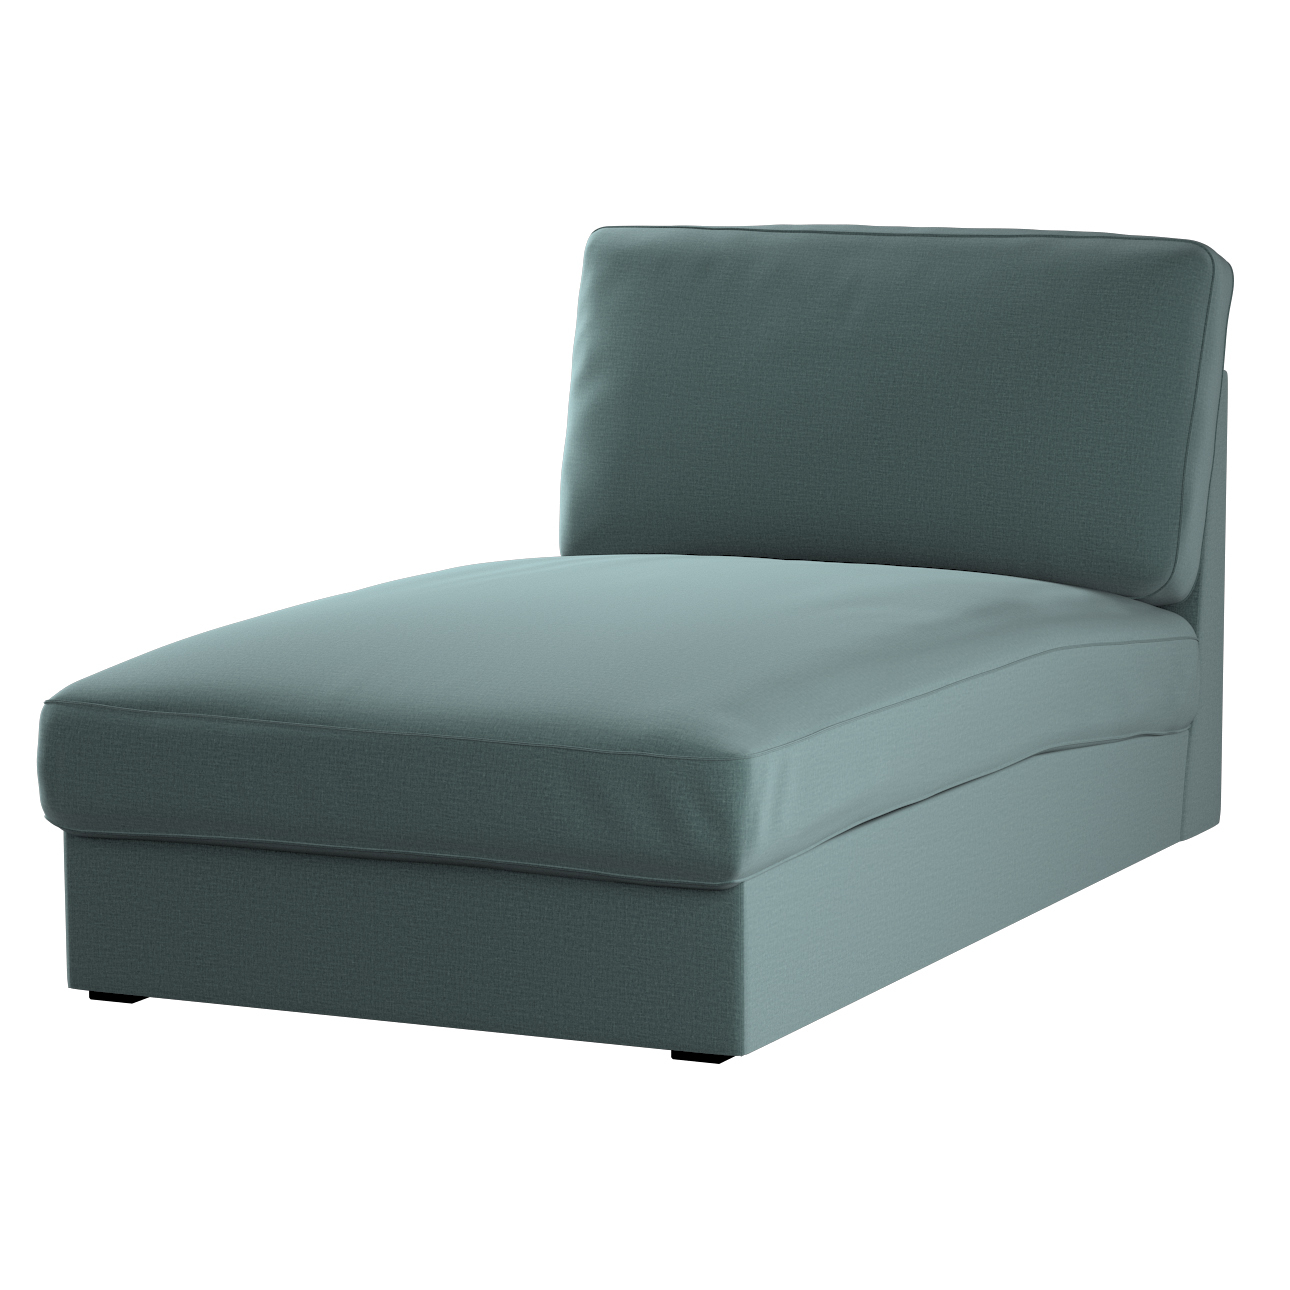 Bezug für Kivik Recamiere Sofa, smaragdgrün, Bezug für Kivik Recamiere, Ing günstig online kaufen